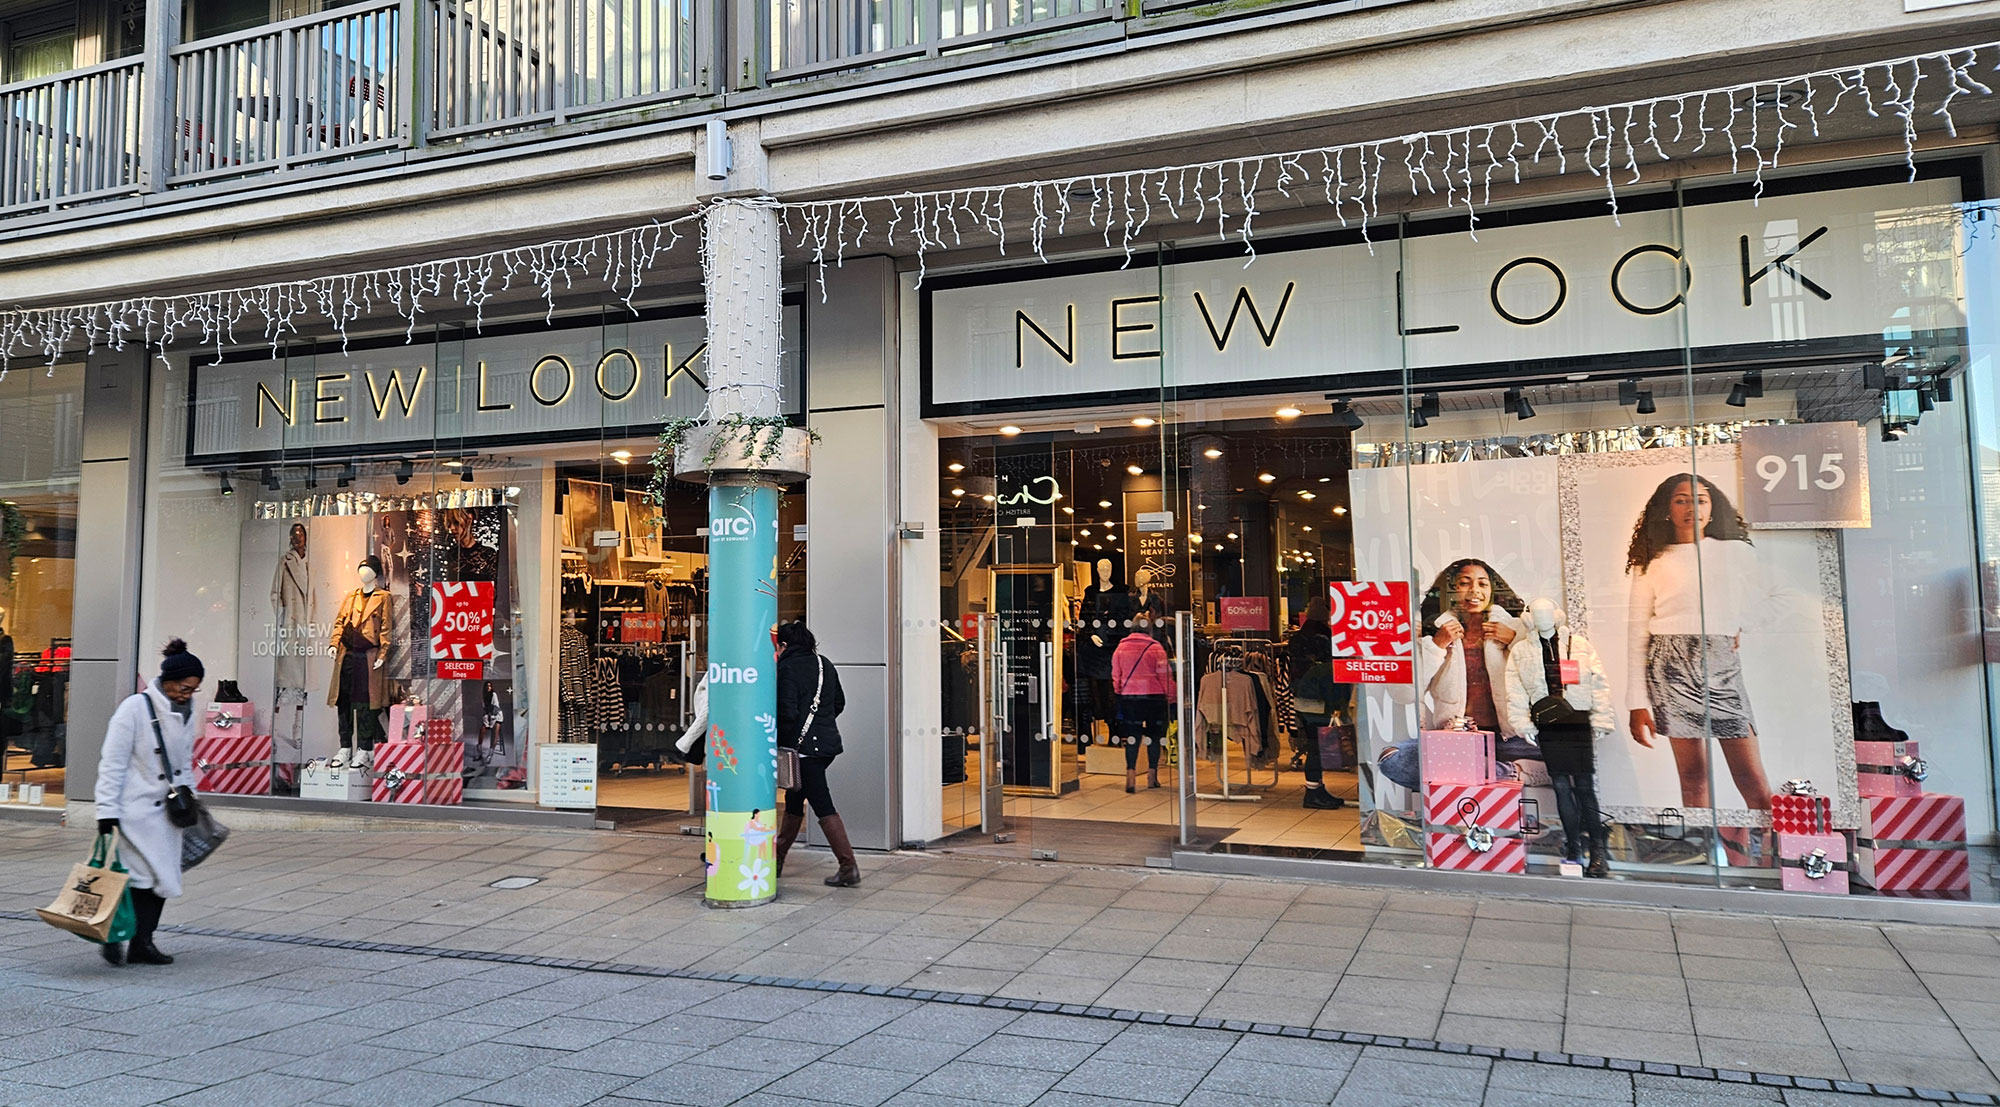 New Look Bury St Edmunds - arc Shopping Centre